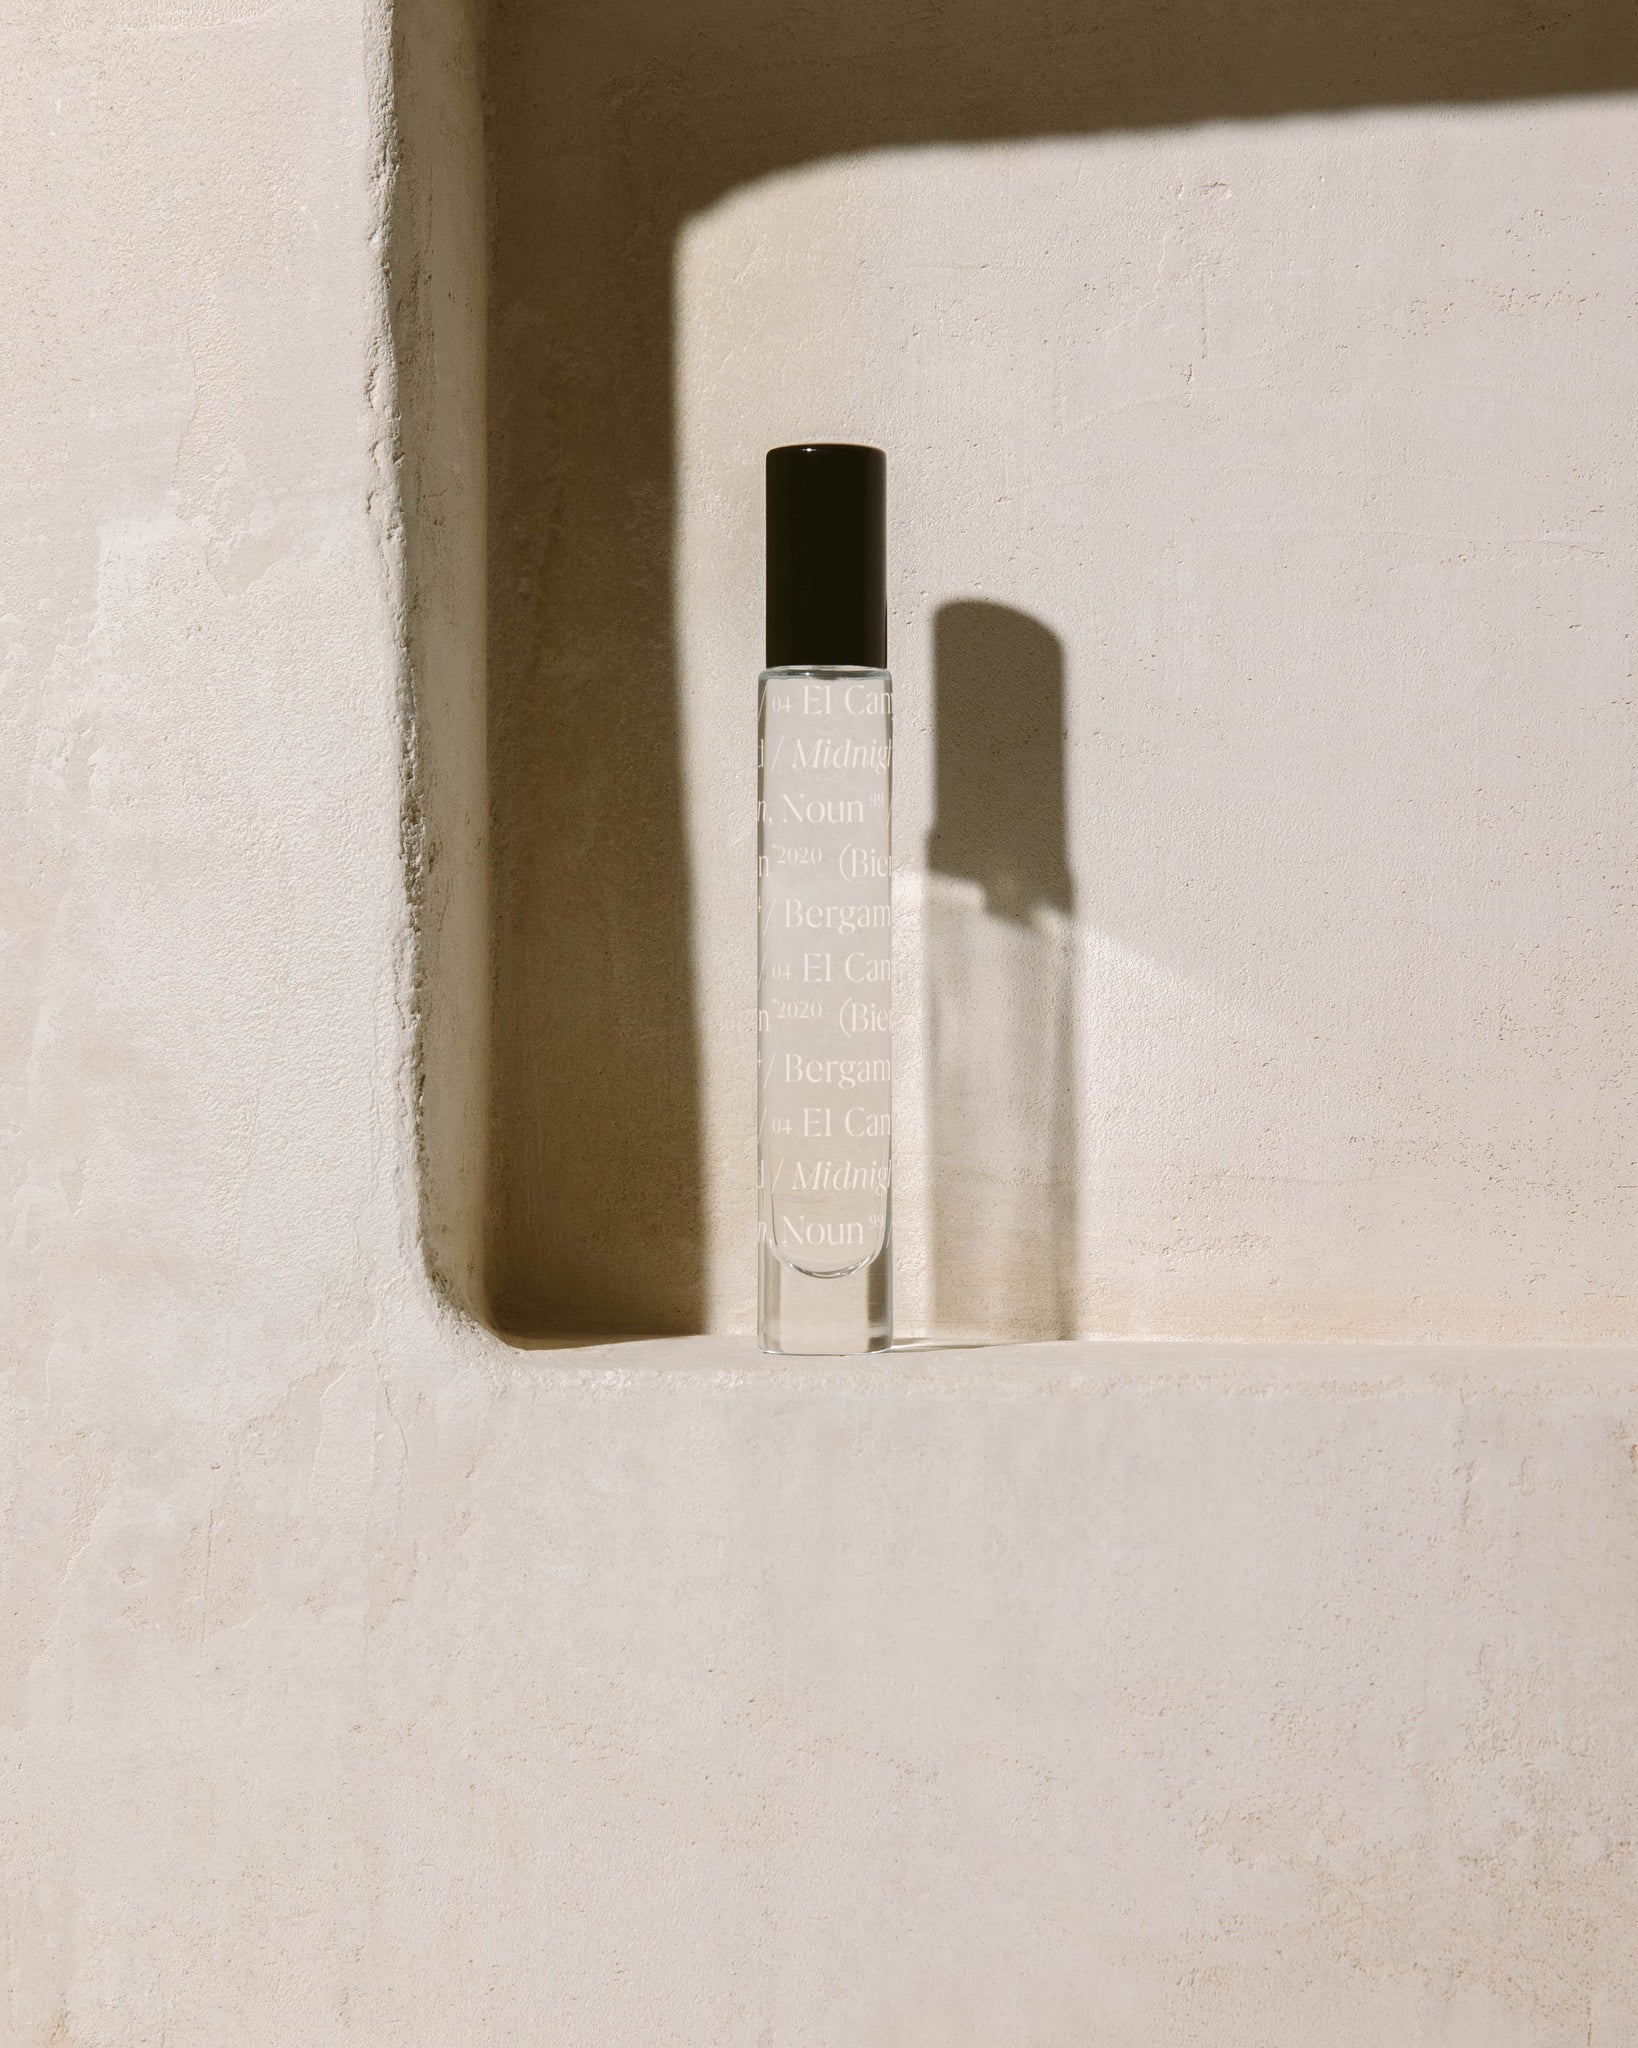 Glass Perfume Bottle Mockup No. 6 - Copal Studio Packaging Mockups For Designers